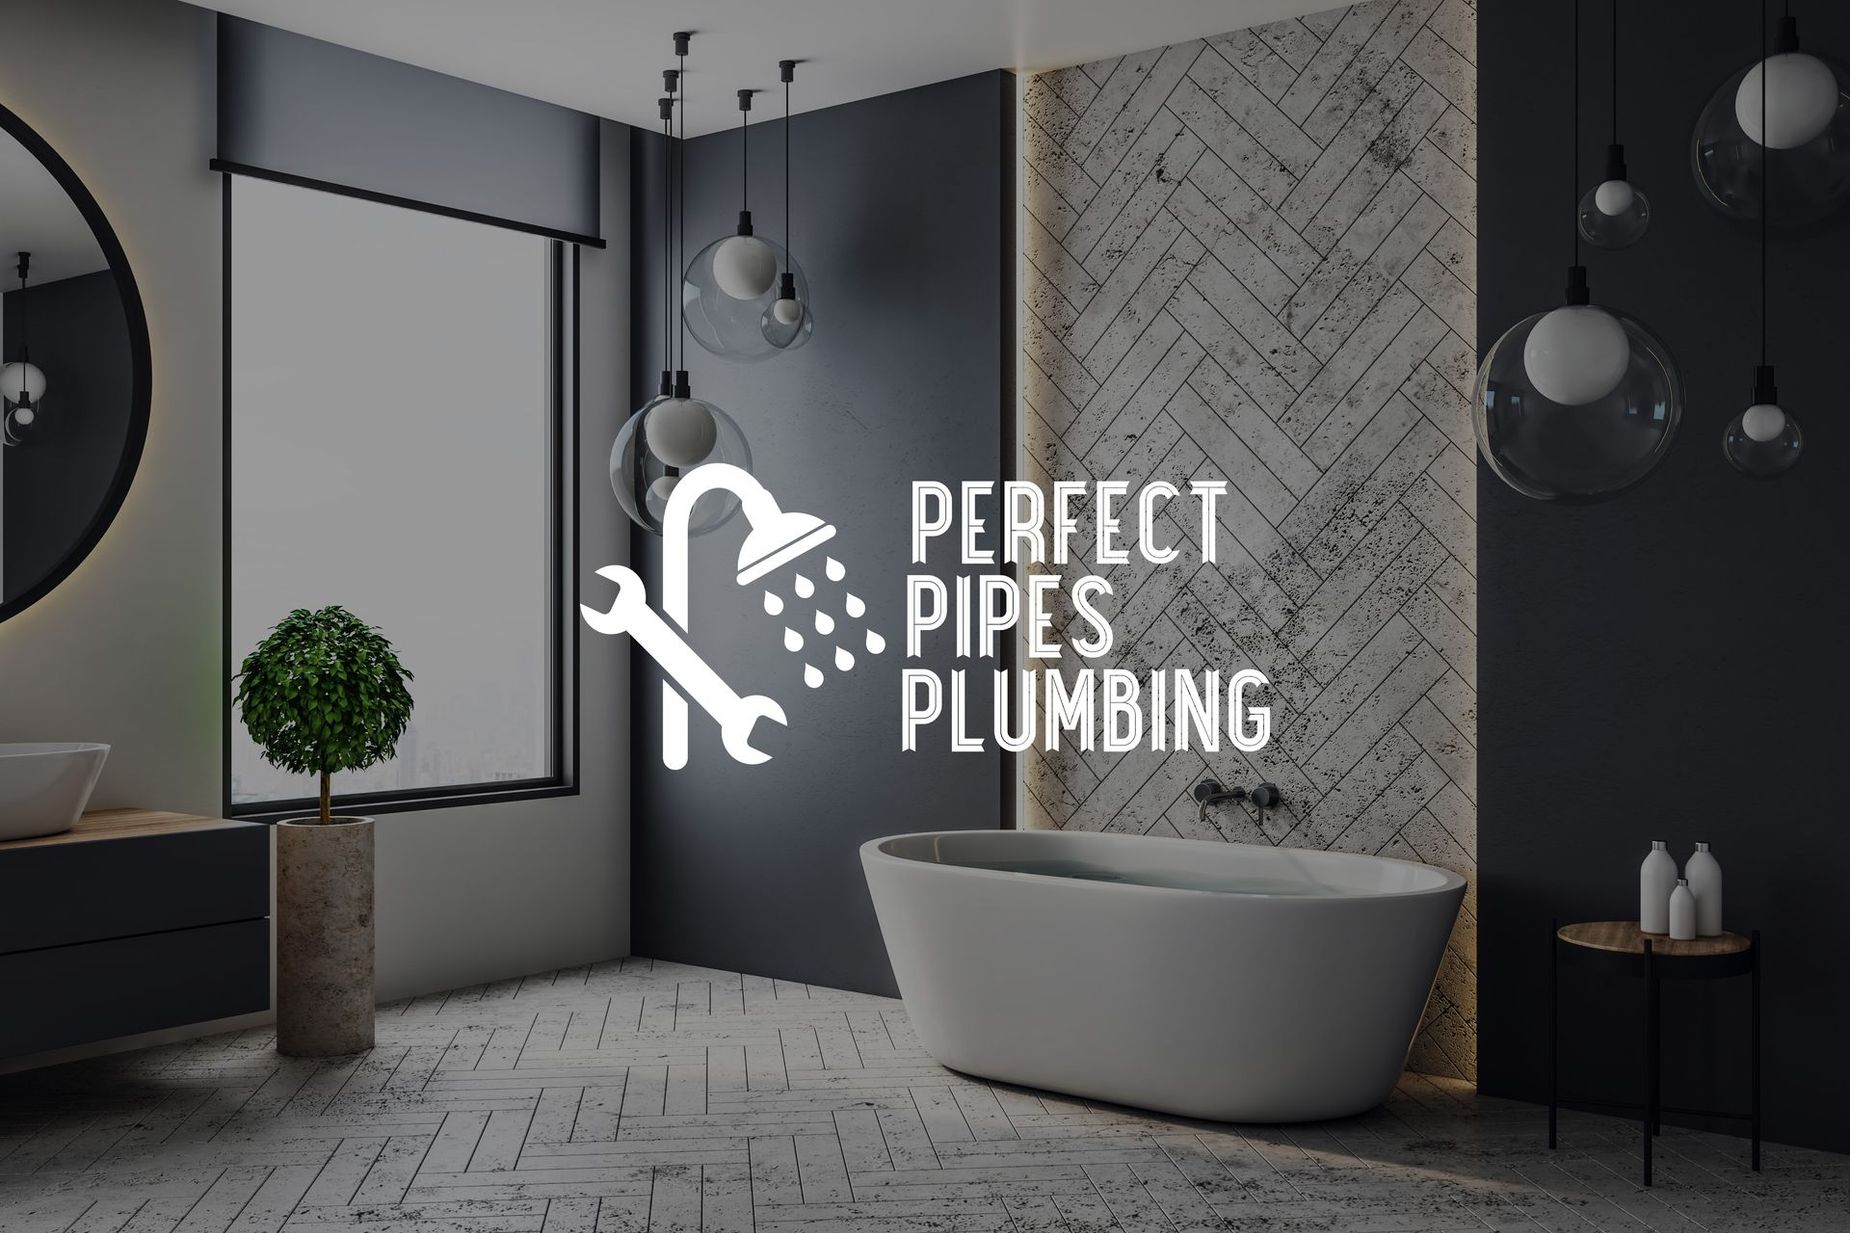 Perfect Pipes Plumbing Logo overlayed on bathroom